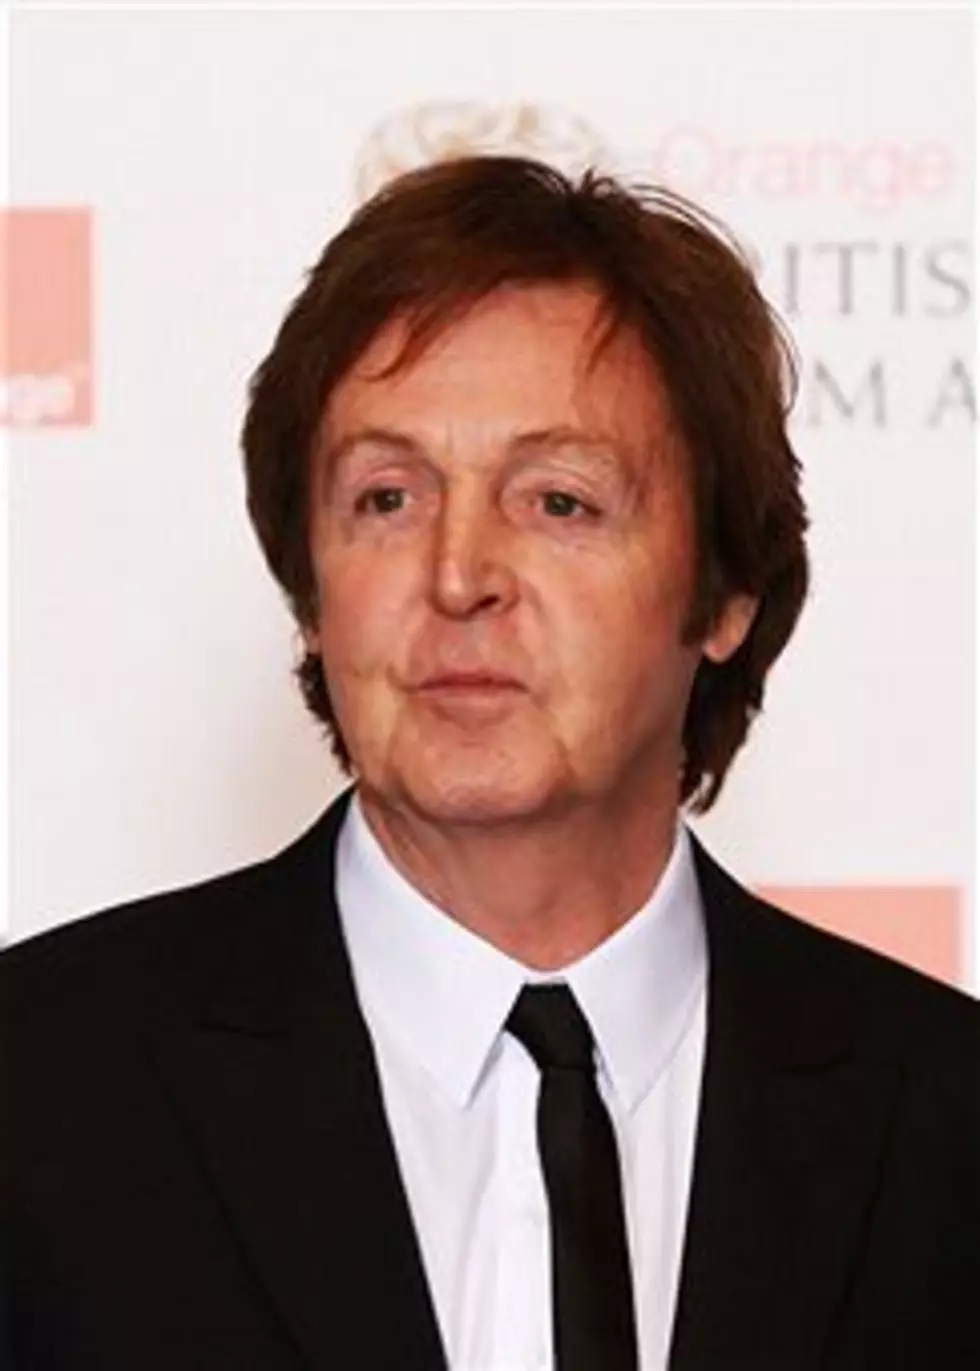 McCartney Wins First Grammy In 39 Years